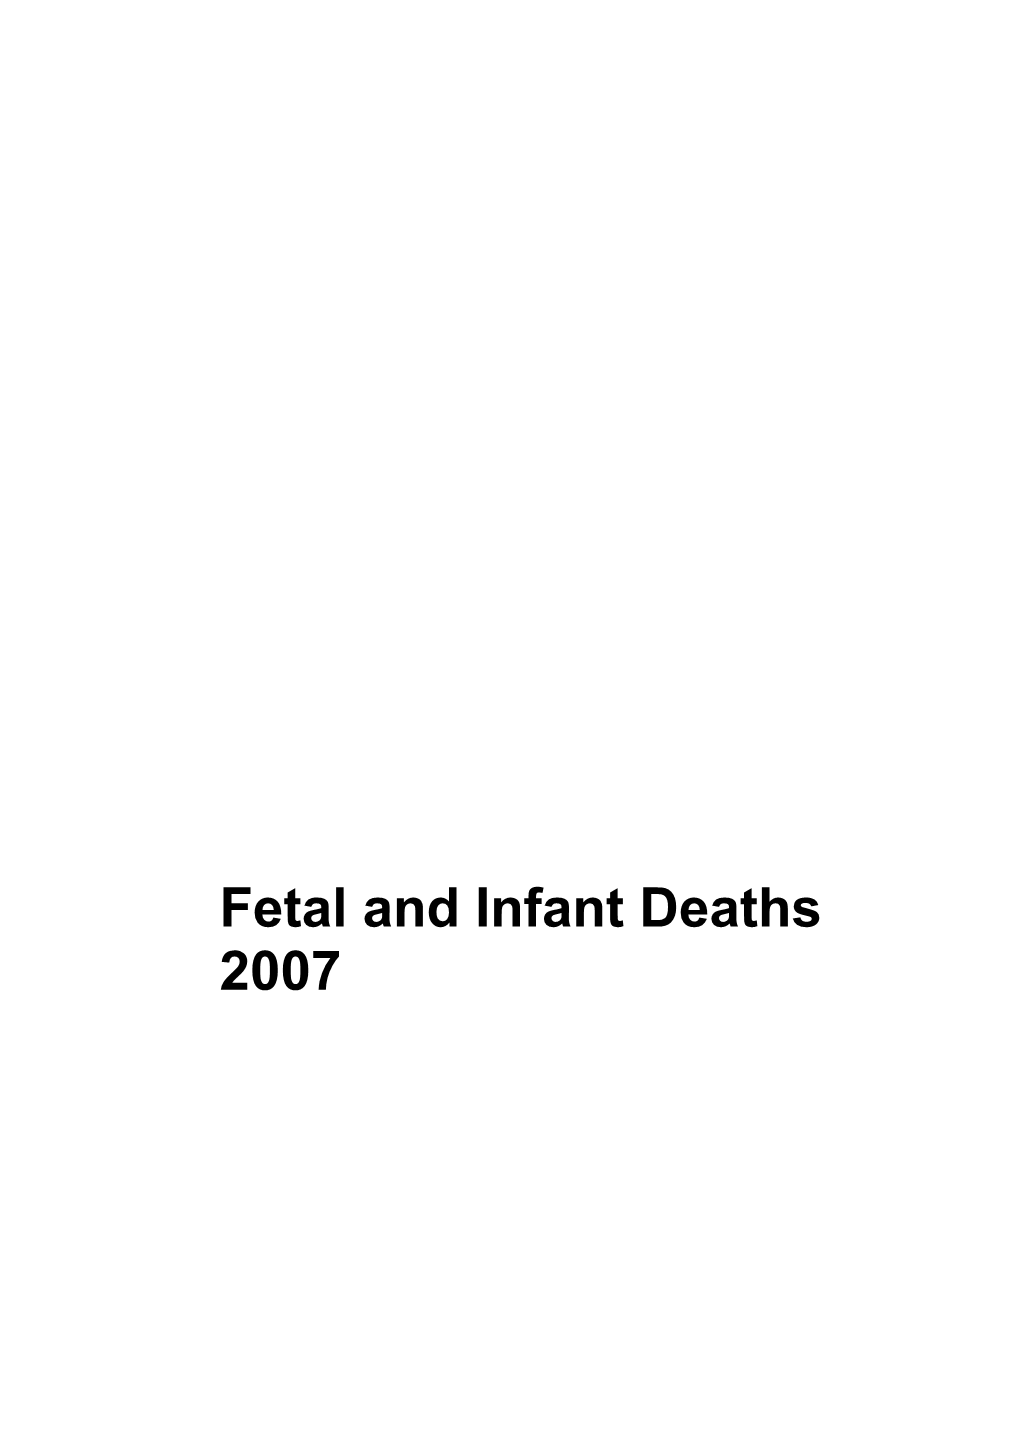 Fetal and Infant Deaths 2007